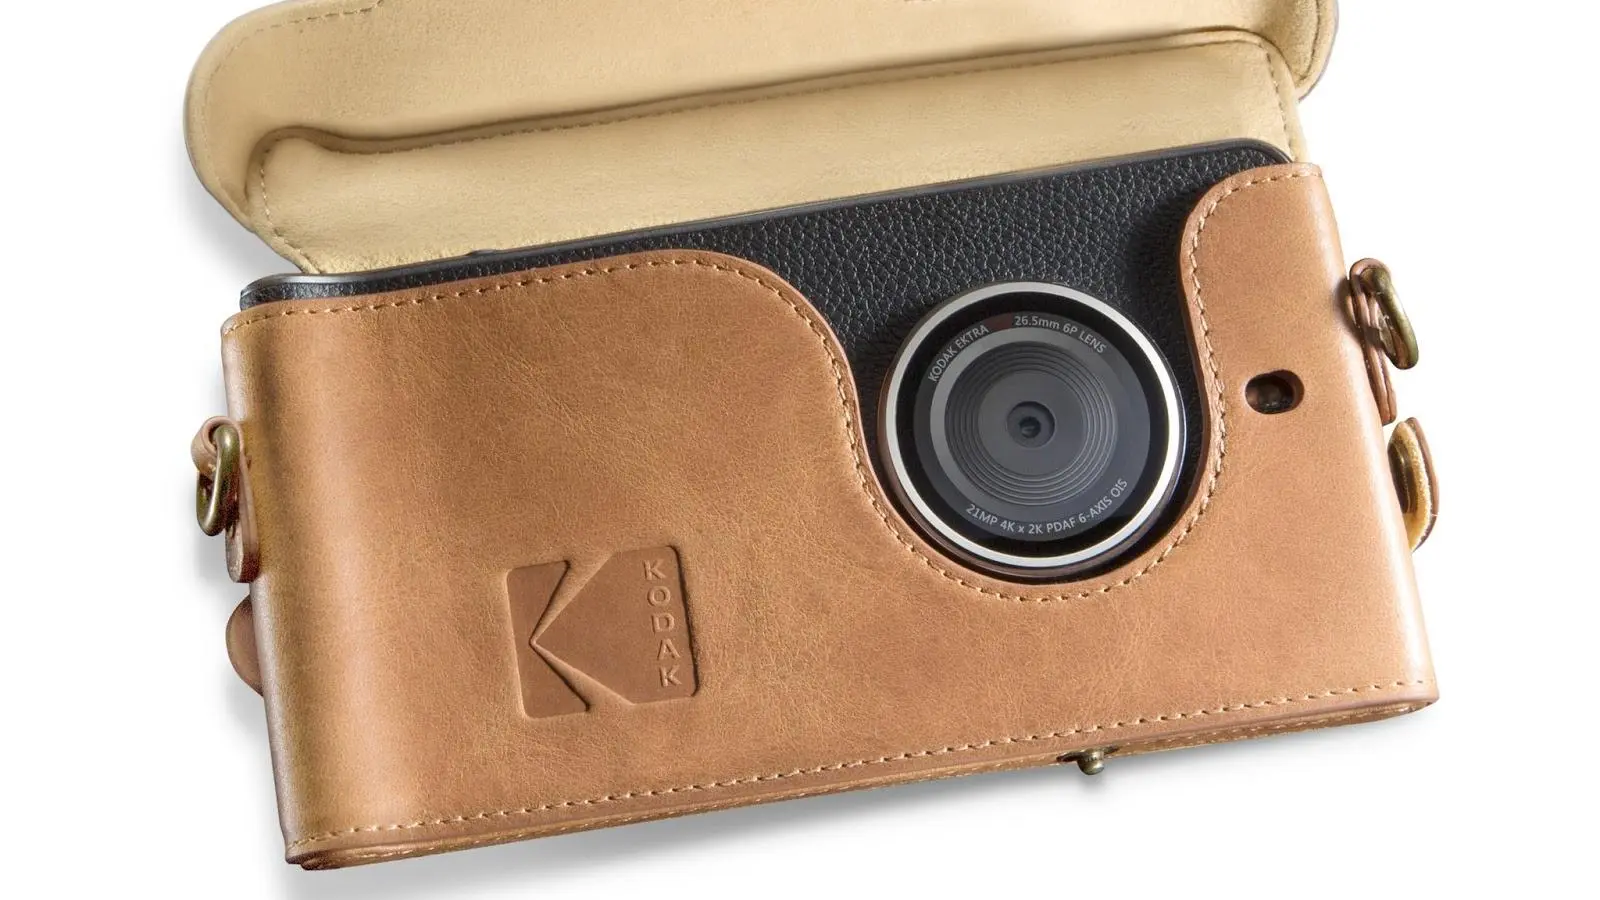 Realme e Kodak criaram um novo smartphone Kodak Ektra